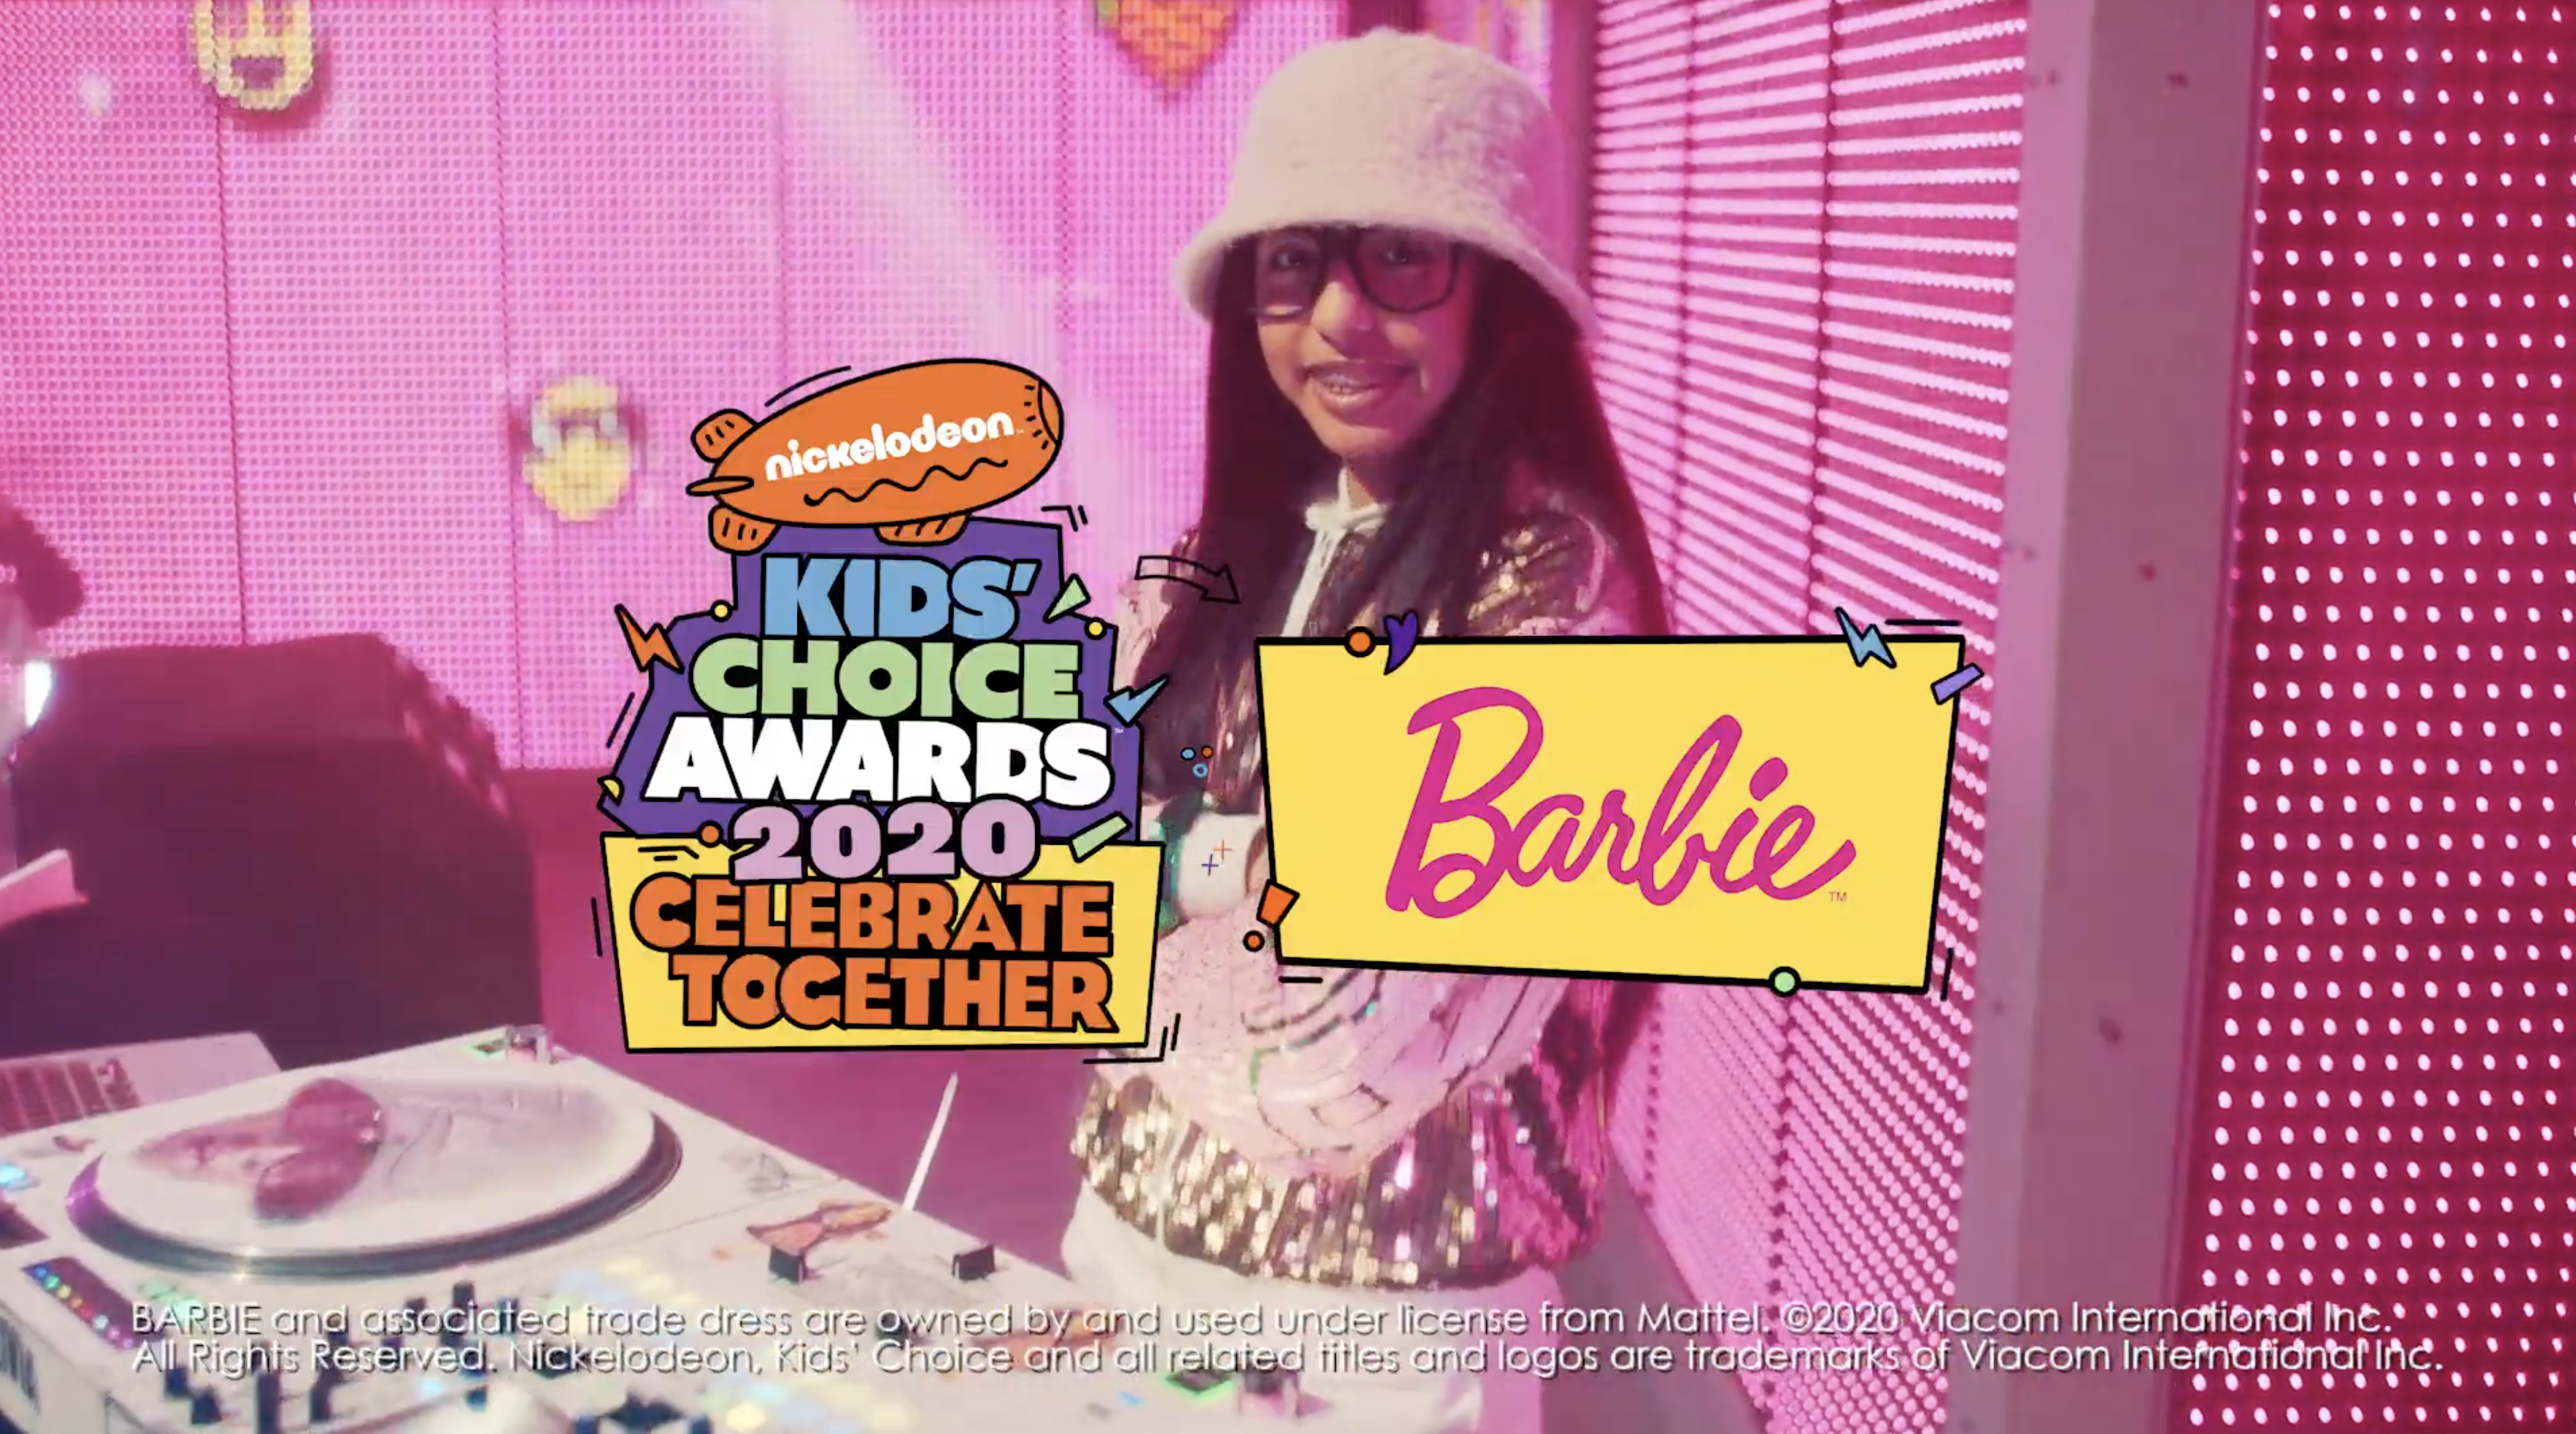 Nickelodeon & Barbie Kids' Choice Awards 2020